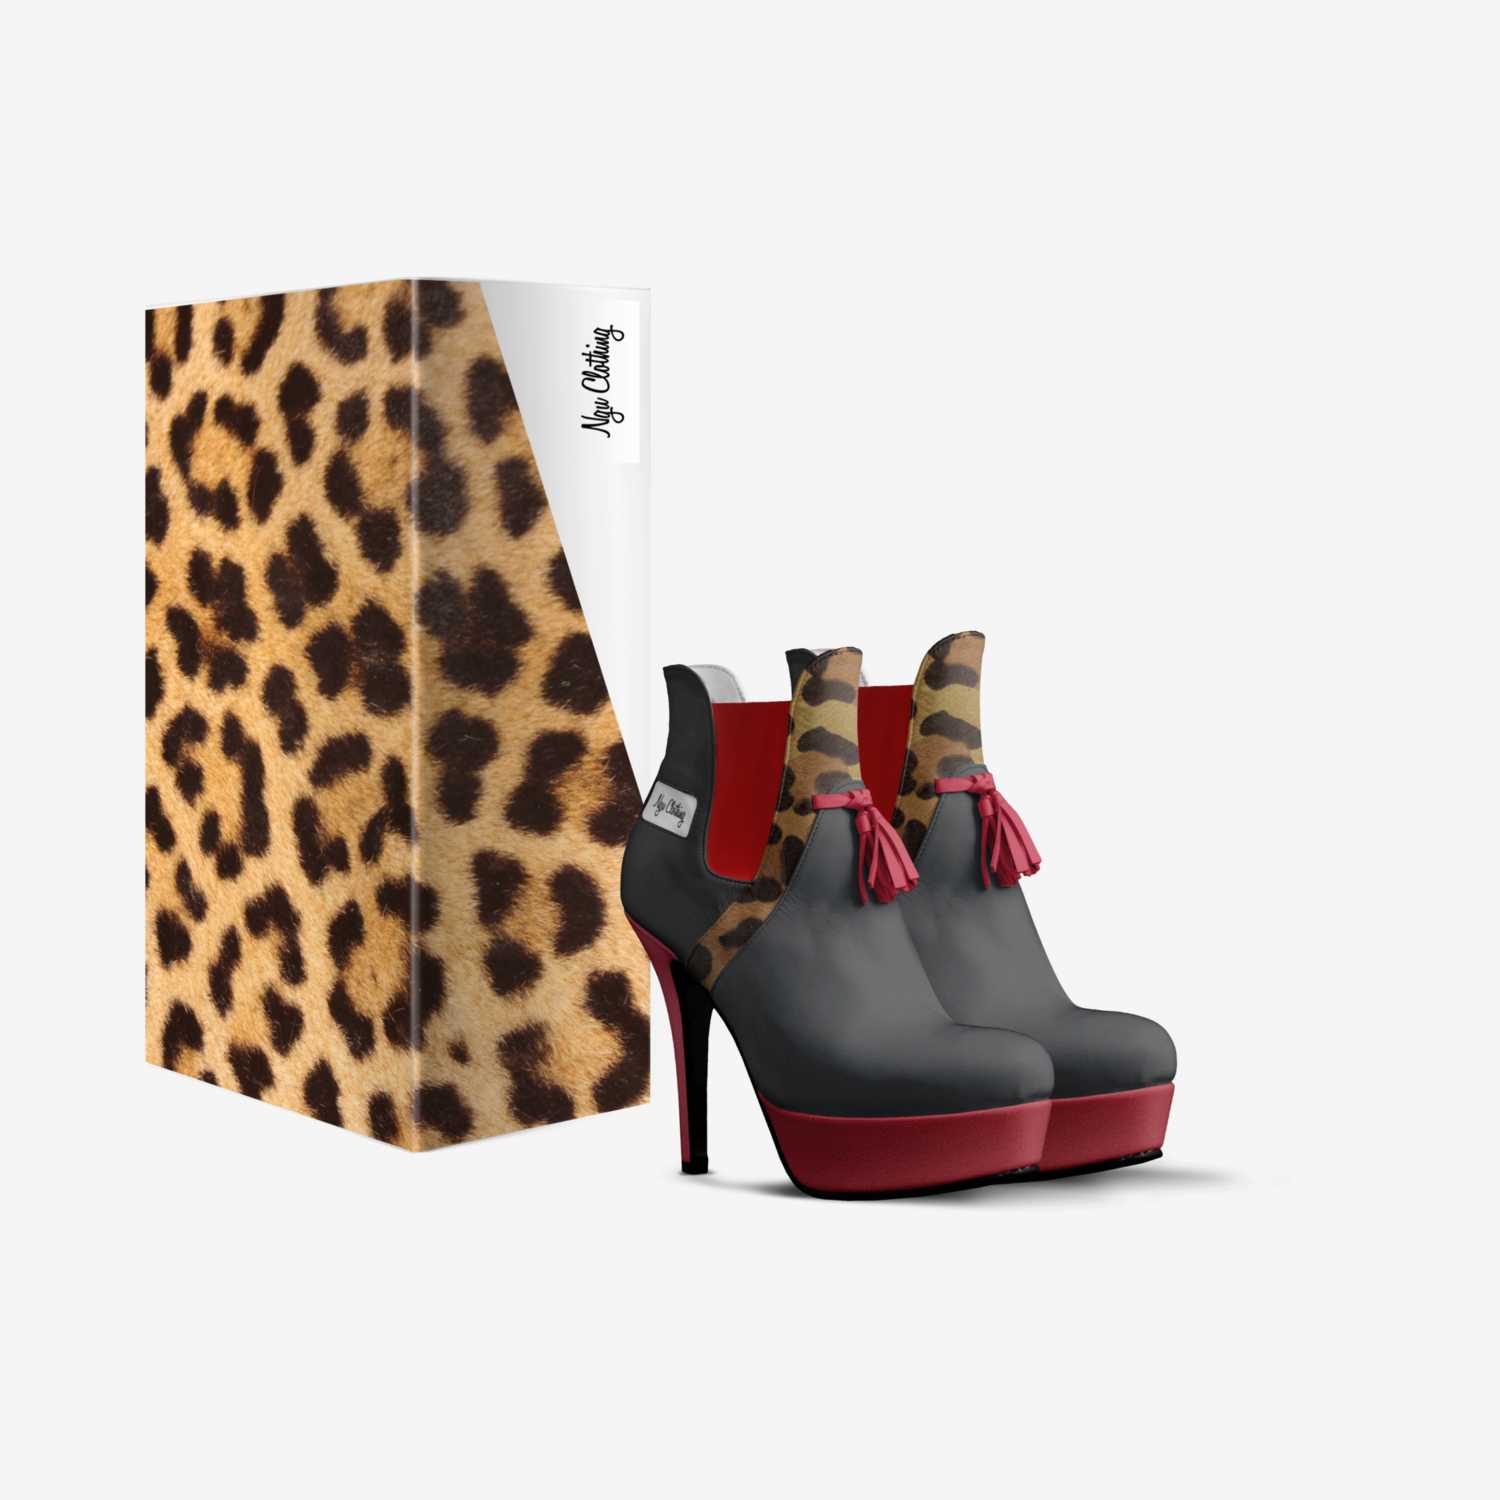 seneb custom made in Italy shoes by Marshall Celestin | Box view